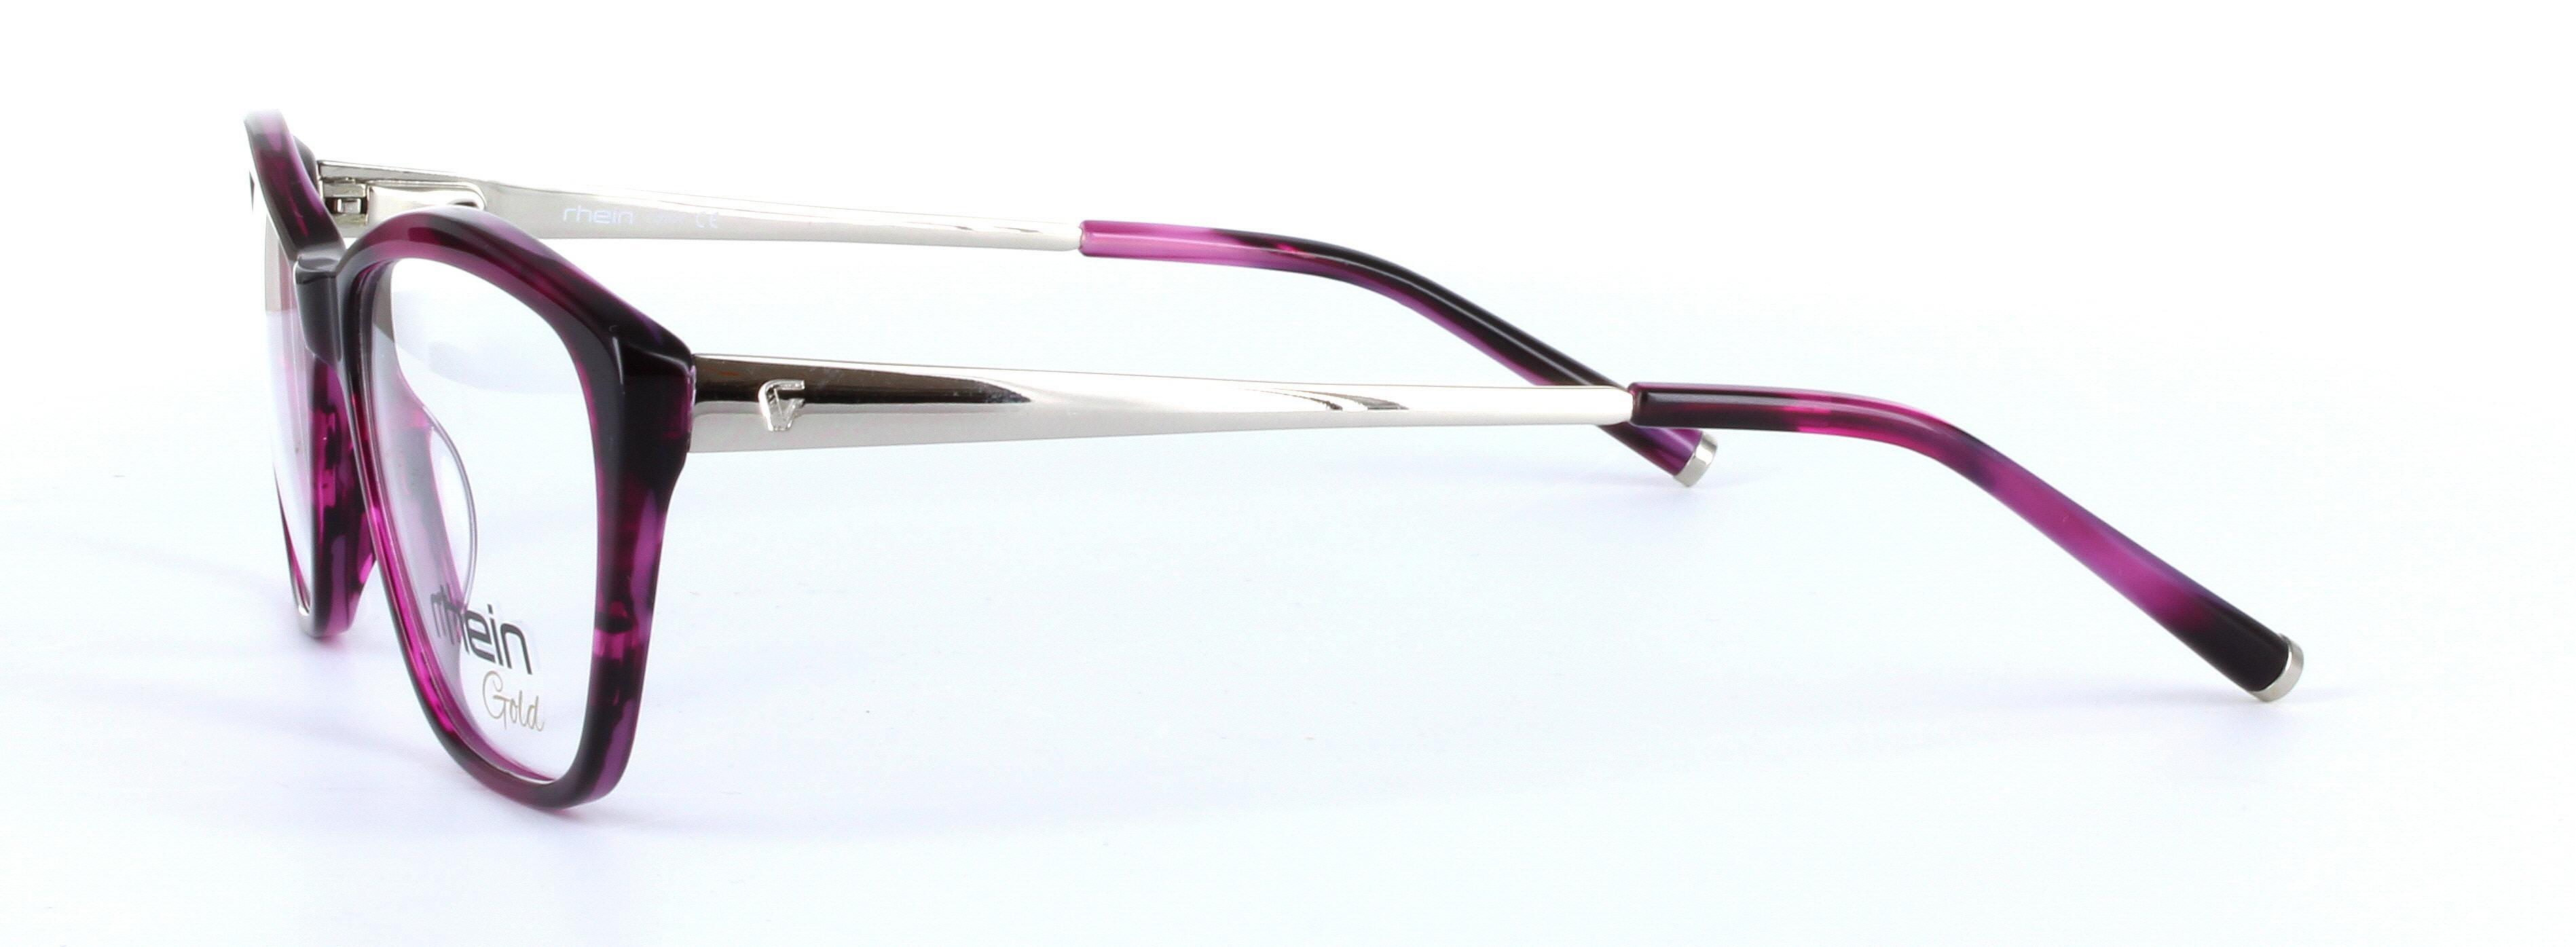 Miranda Purple Full Rim Oval Plastic Glasses - Image View 2